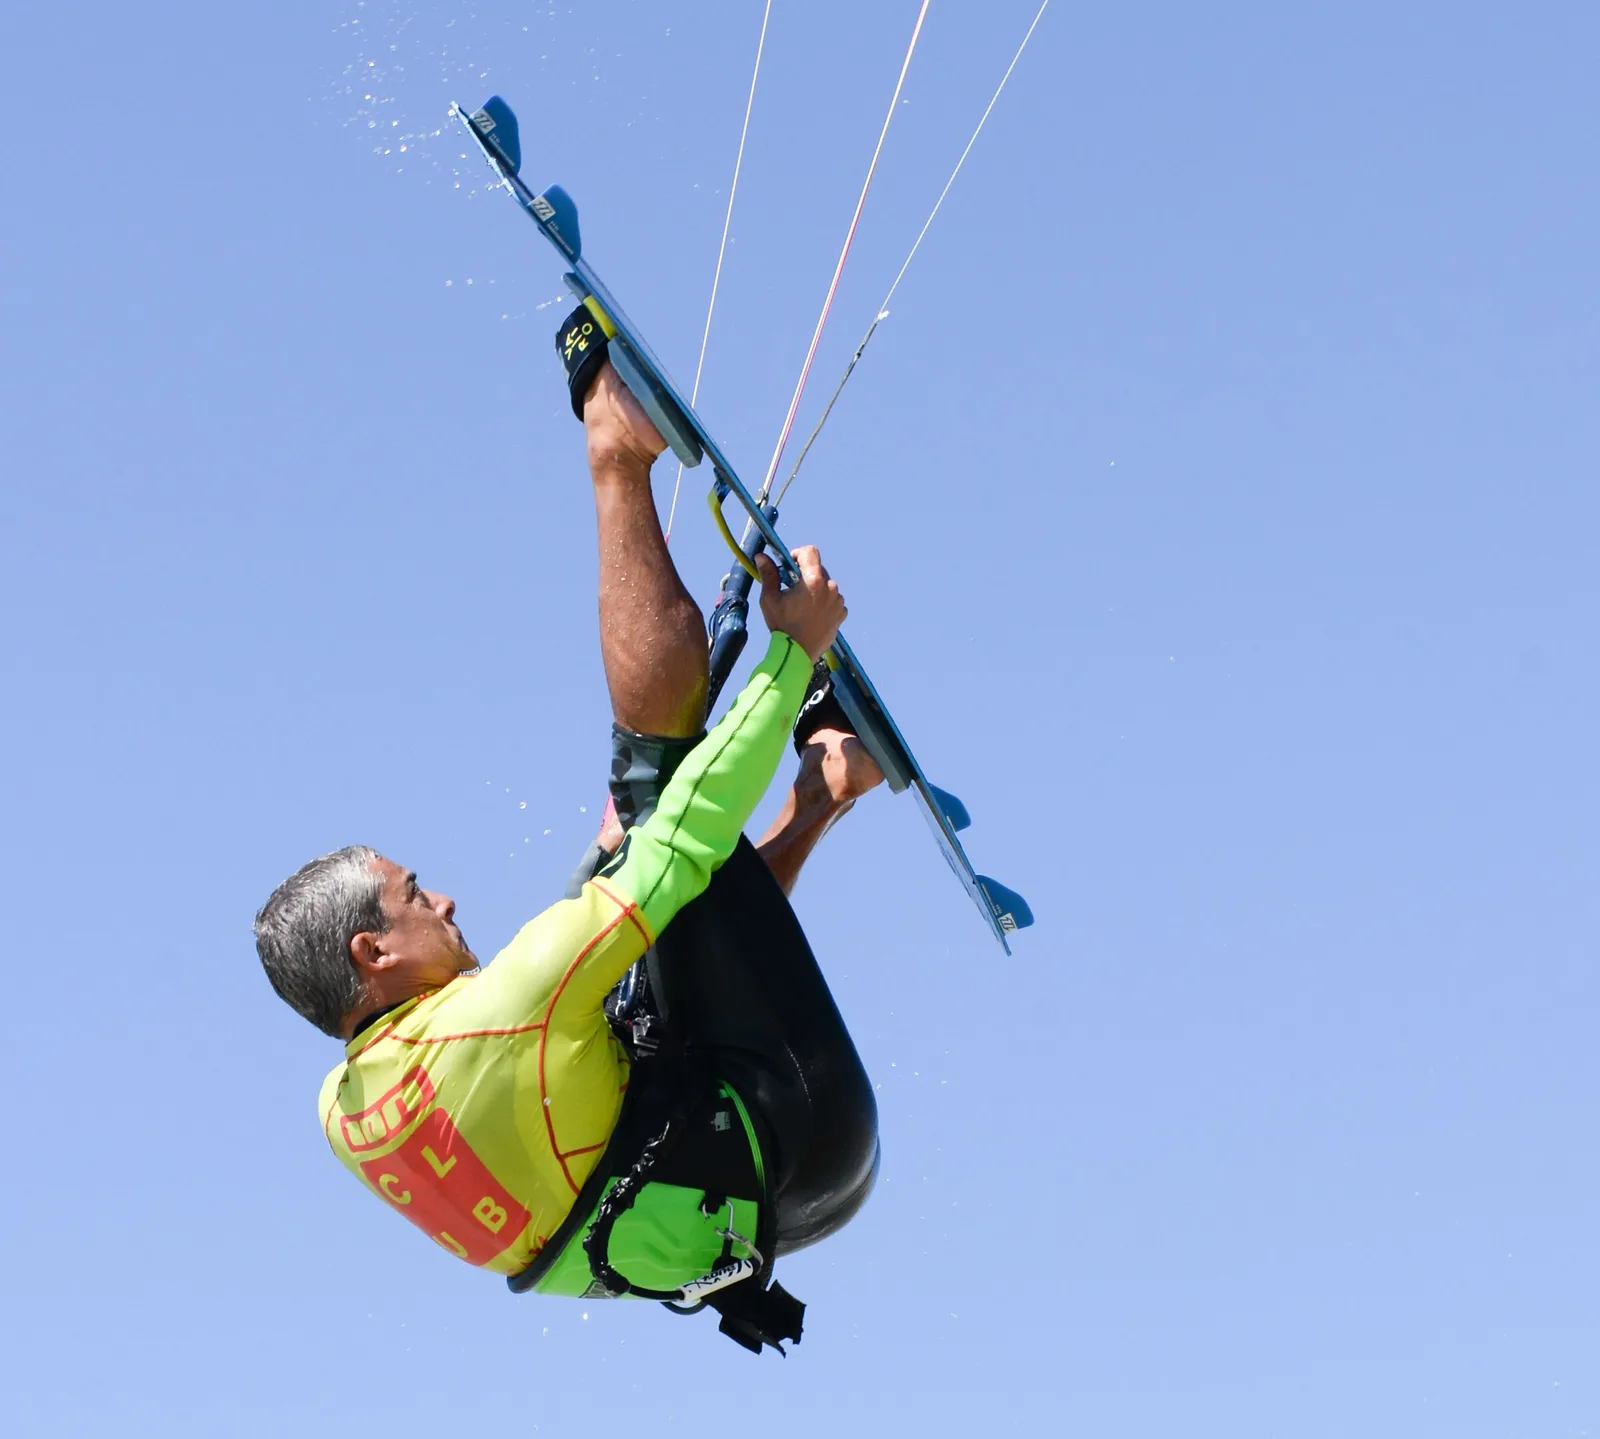 kitesurfeur pendant un saut grabbé